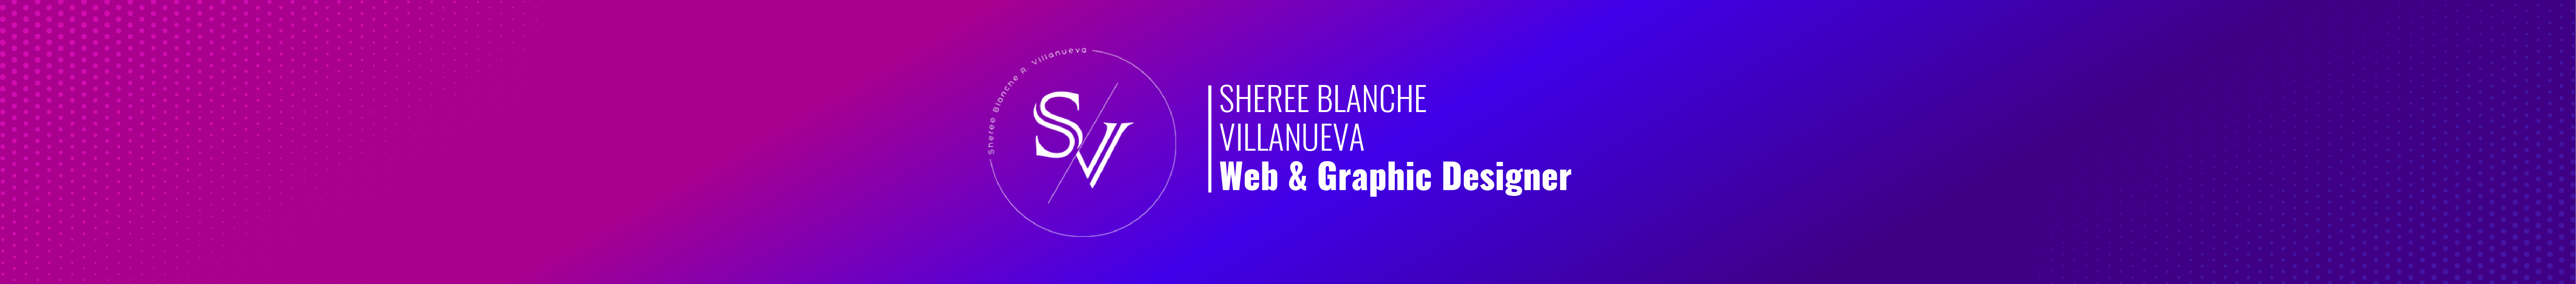 Profielbanner van Sheree Blanche Villanueva